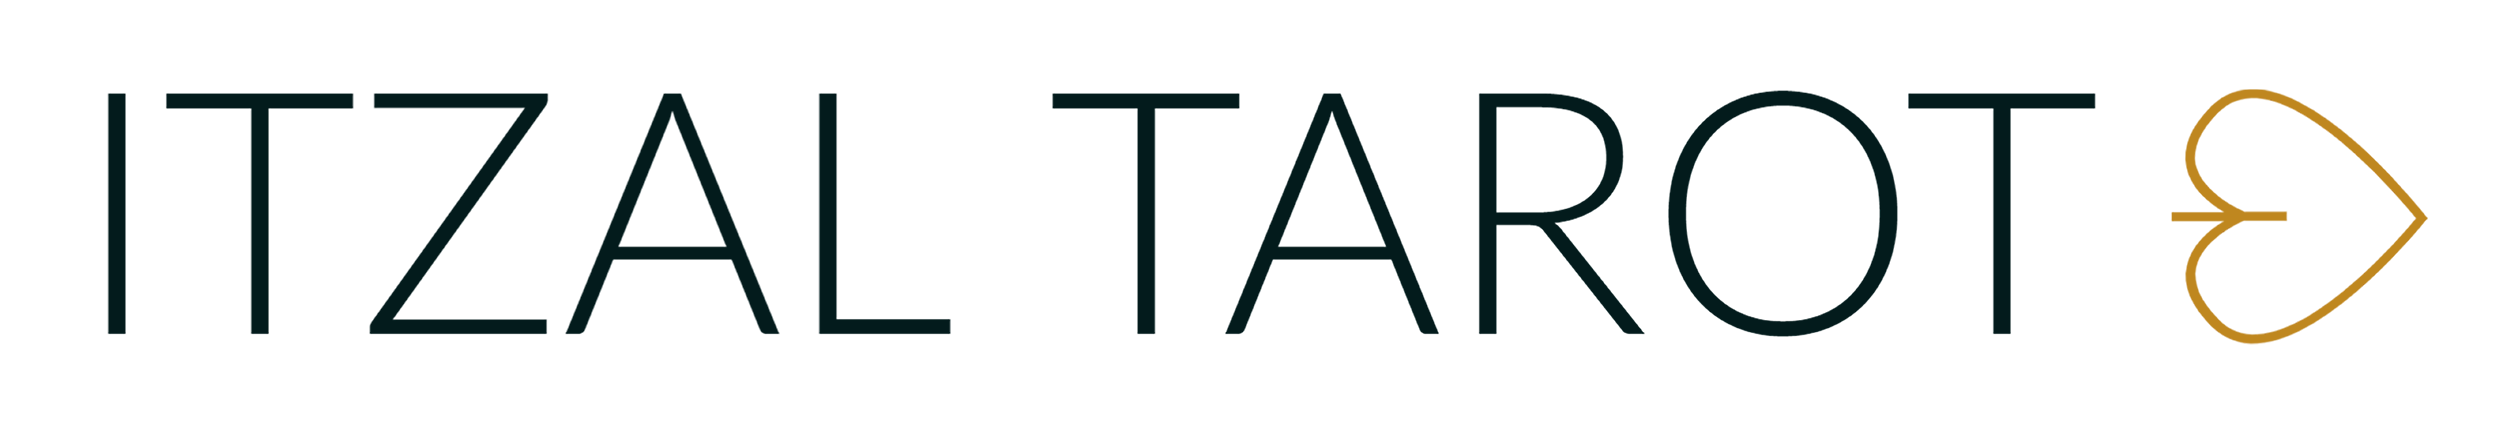 Logo Itzal tarot